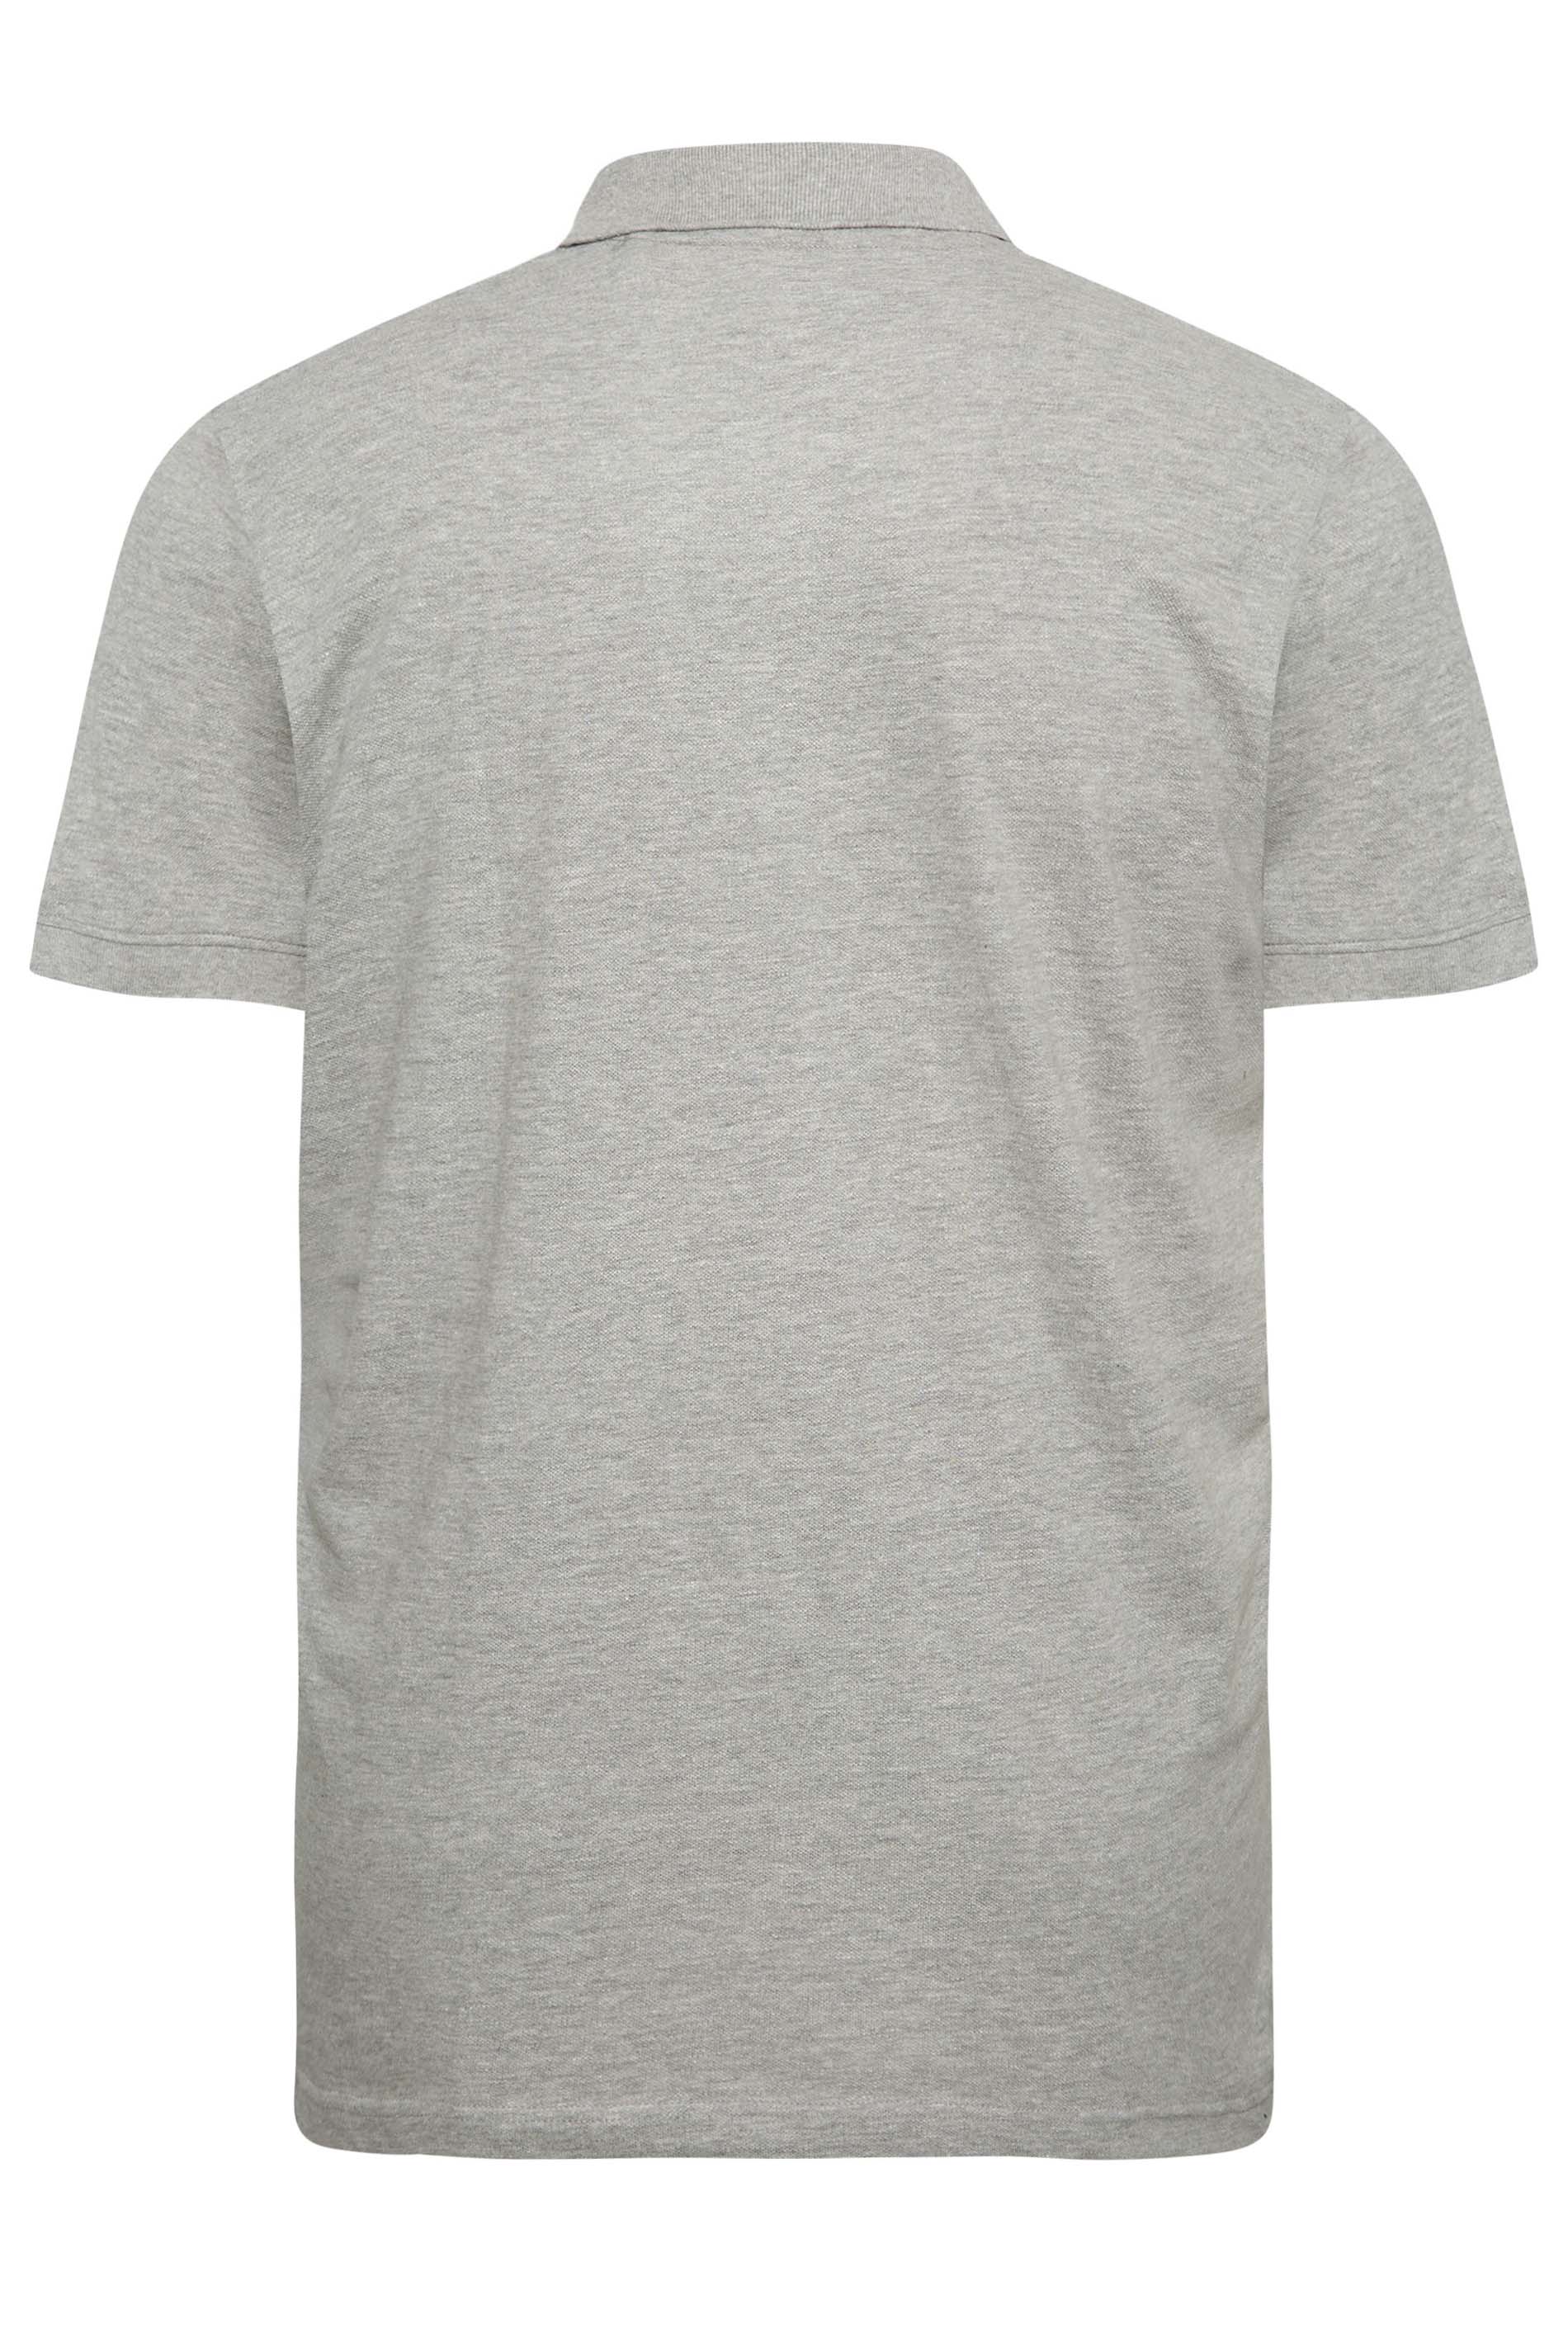 Rhino Grey Men's Melange Polo T Shirt - Zoop